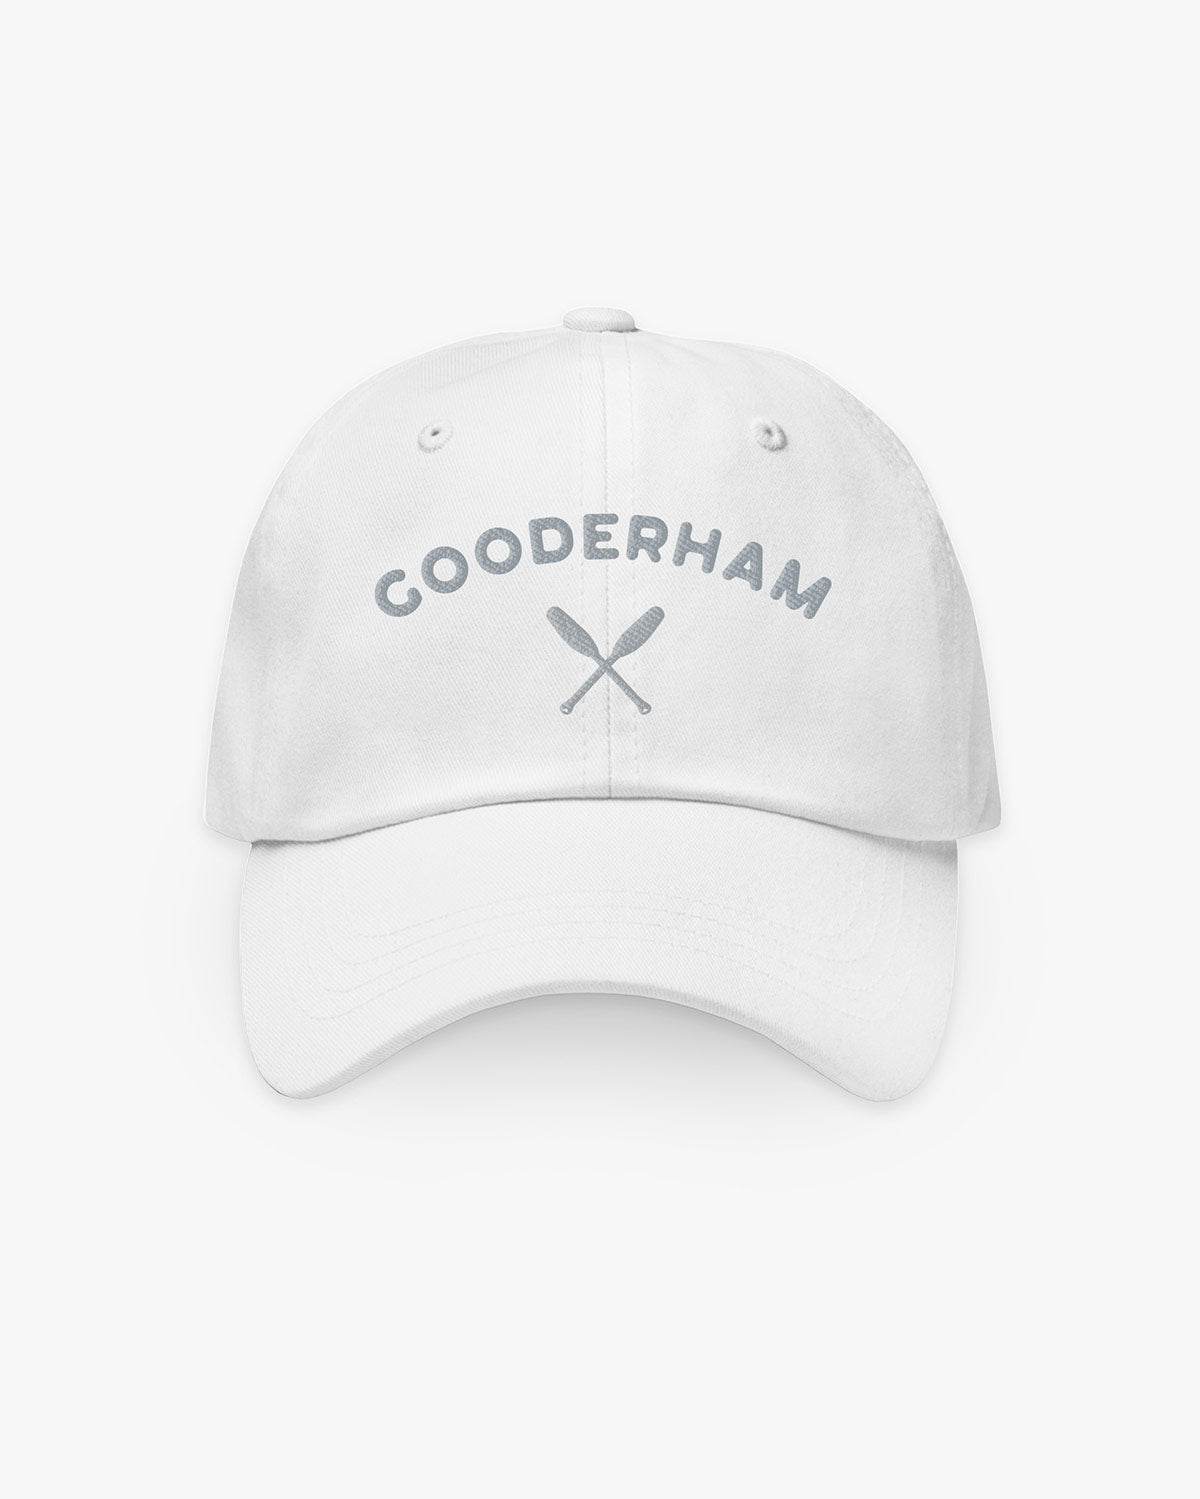 Oars - Gooderham - Hat